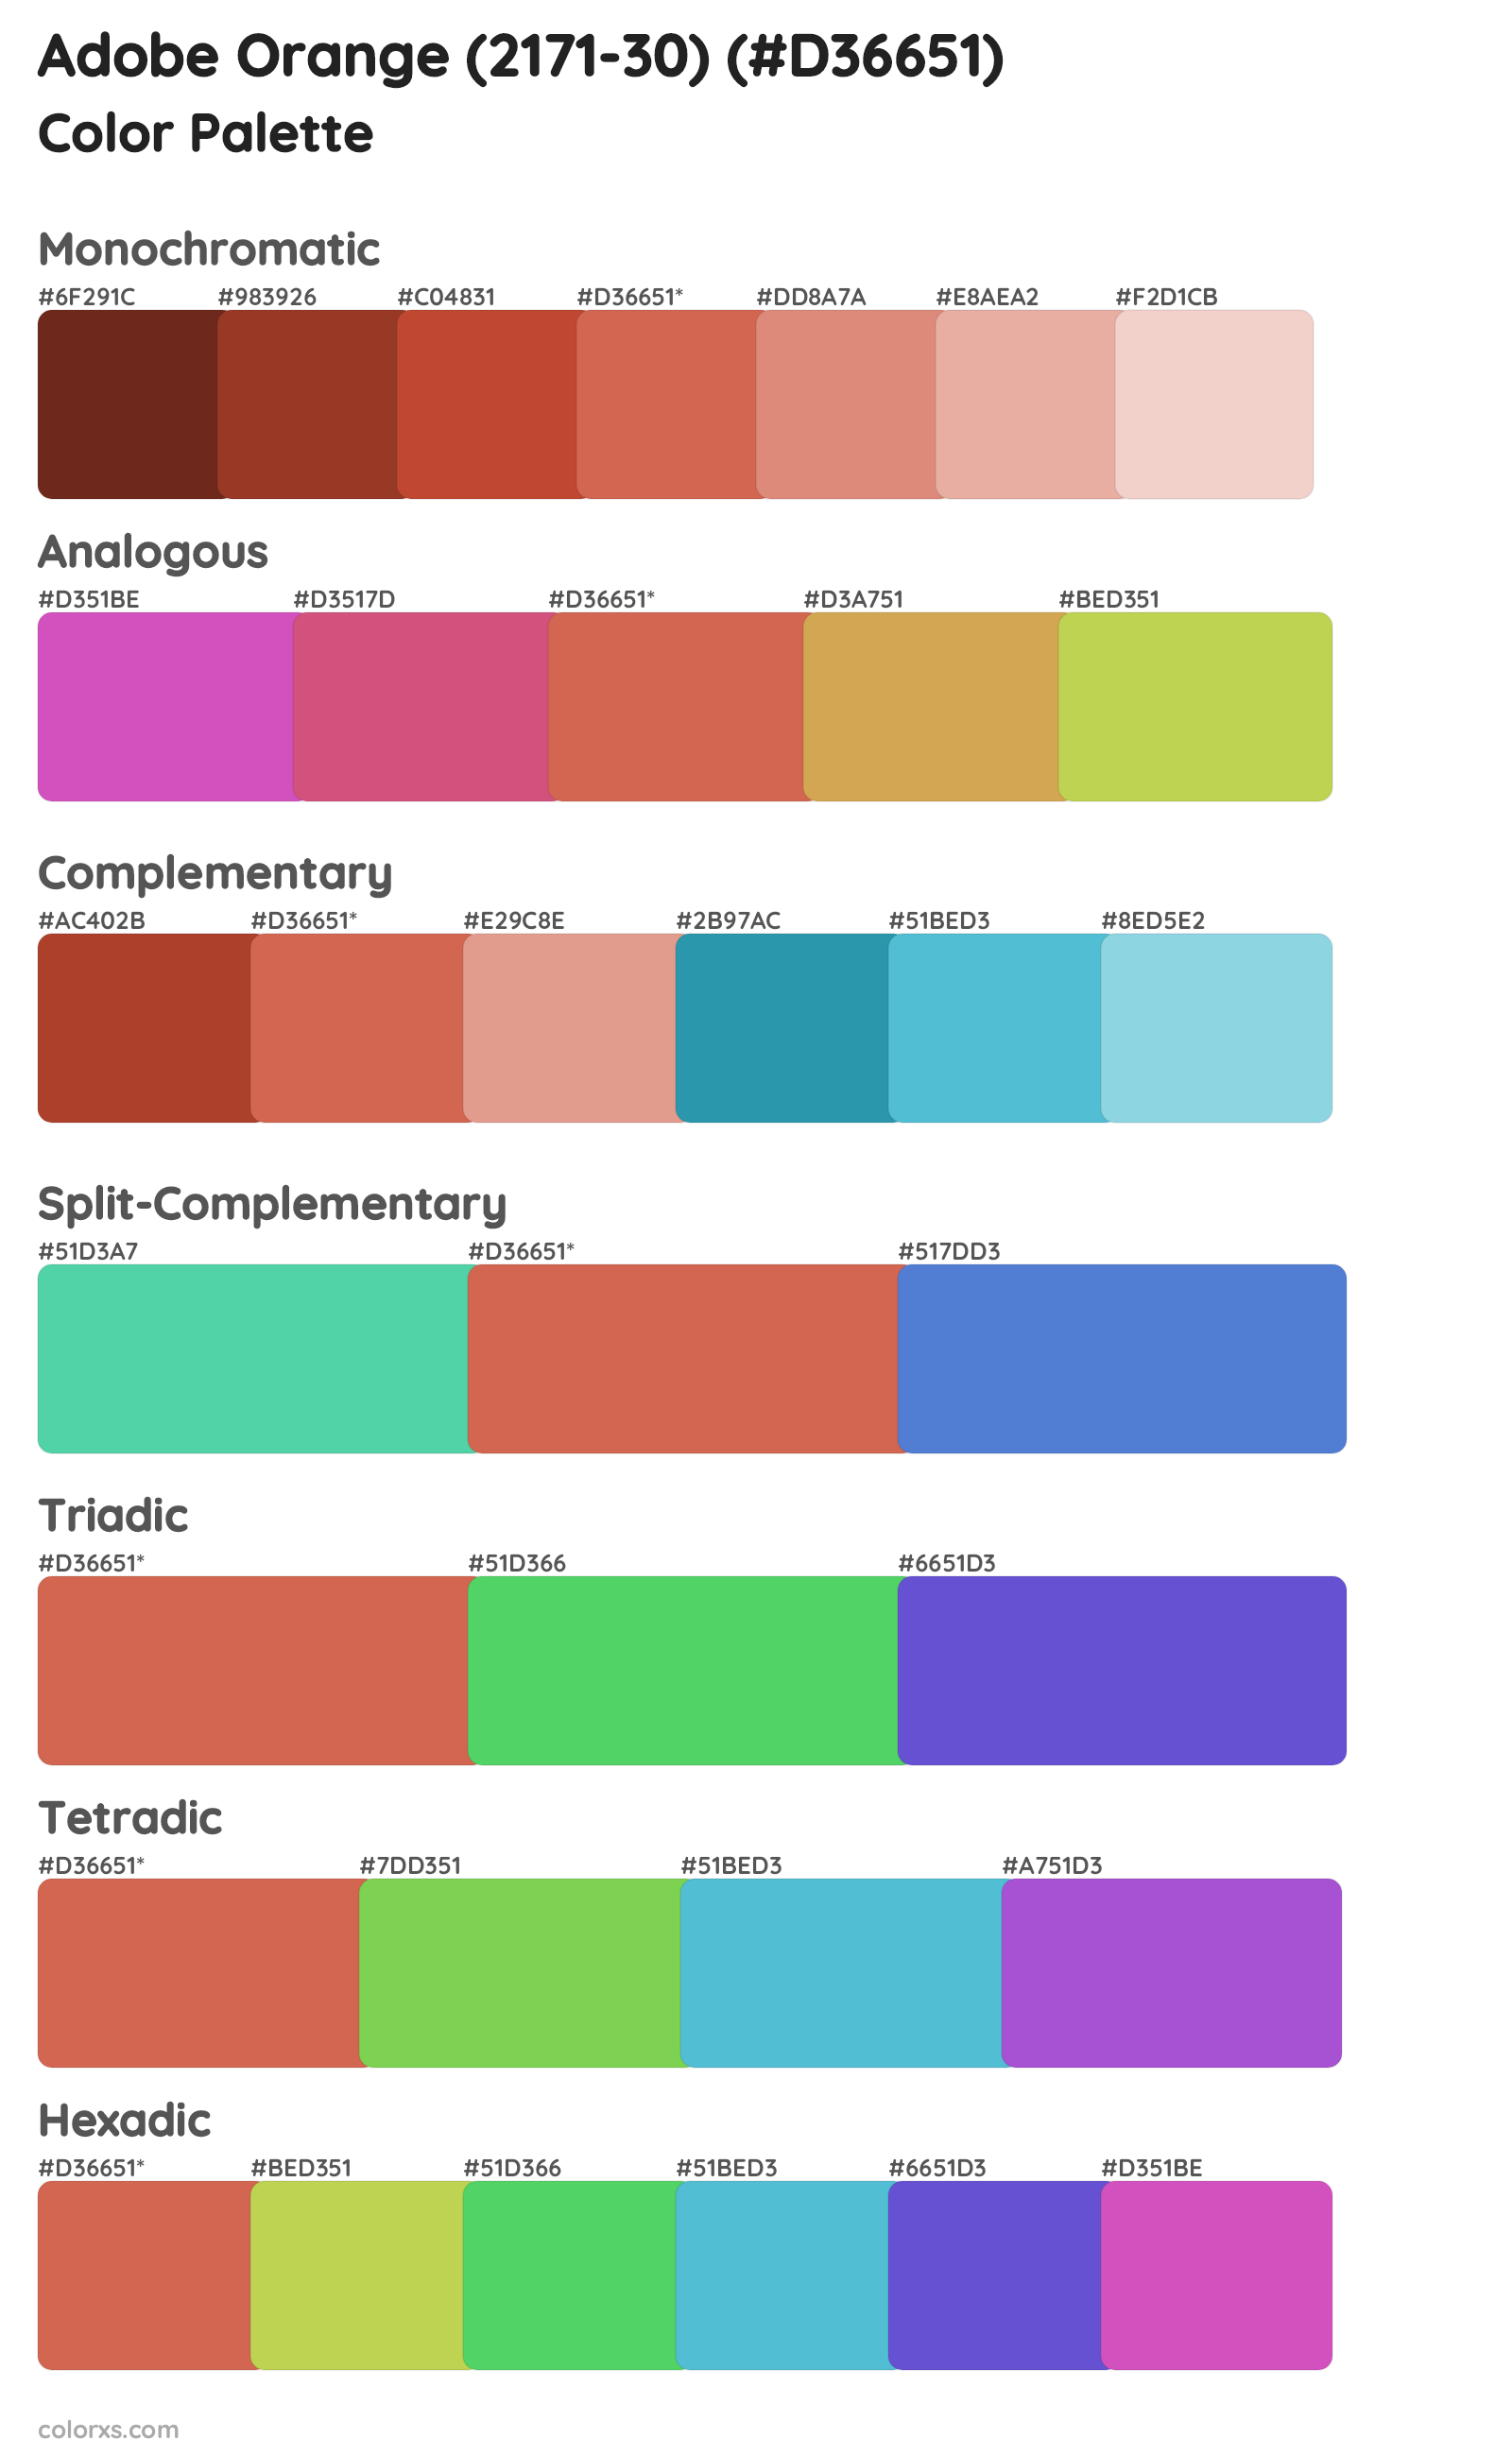 Adobe Orange (2171-30) Color Scheme Palettes